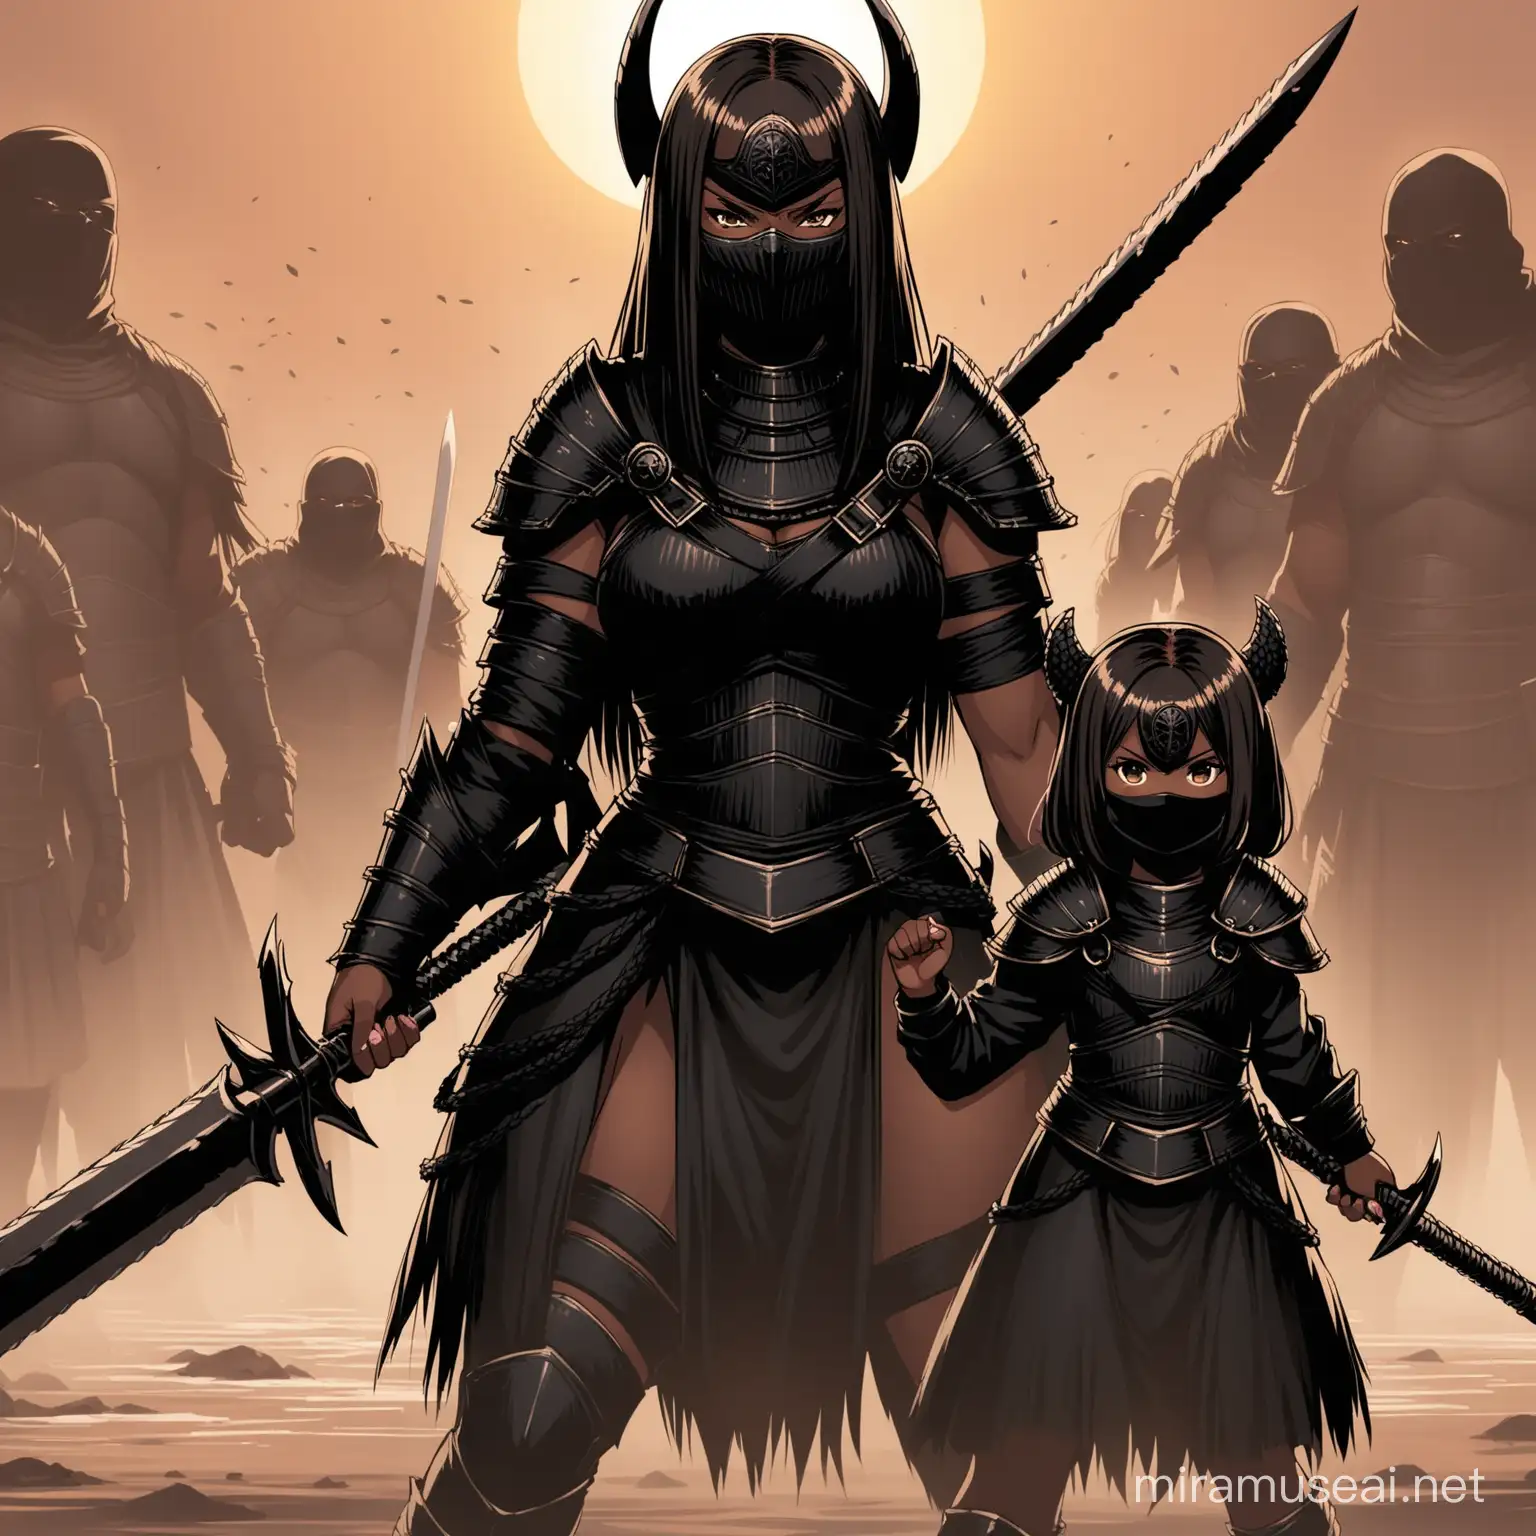 Fierce Black Warrior and Daughter in Battle Stance